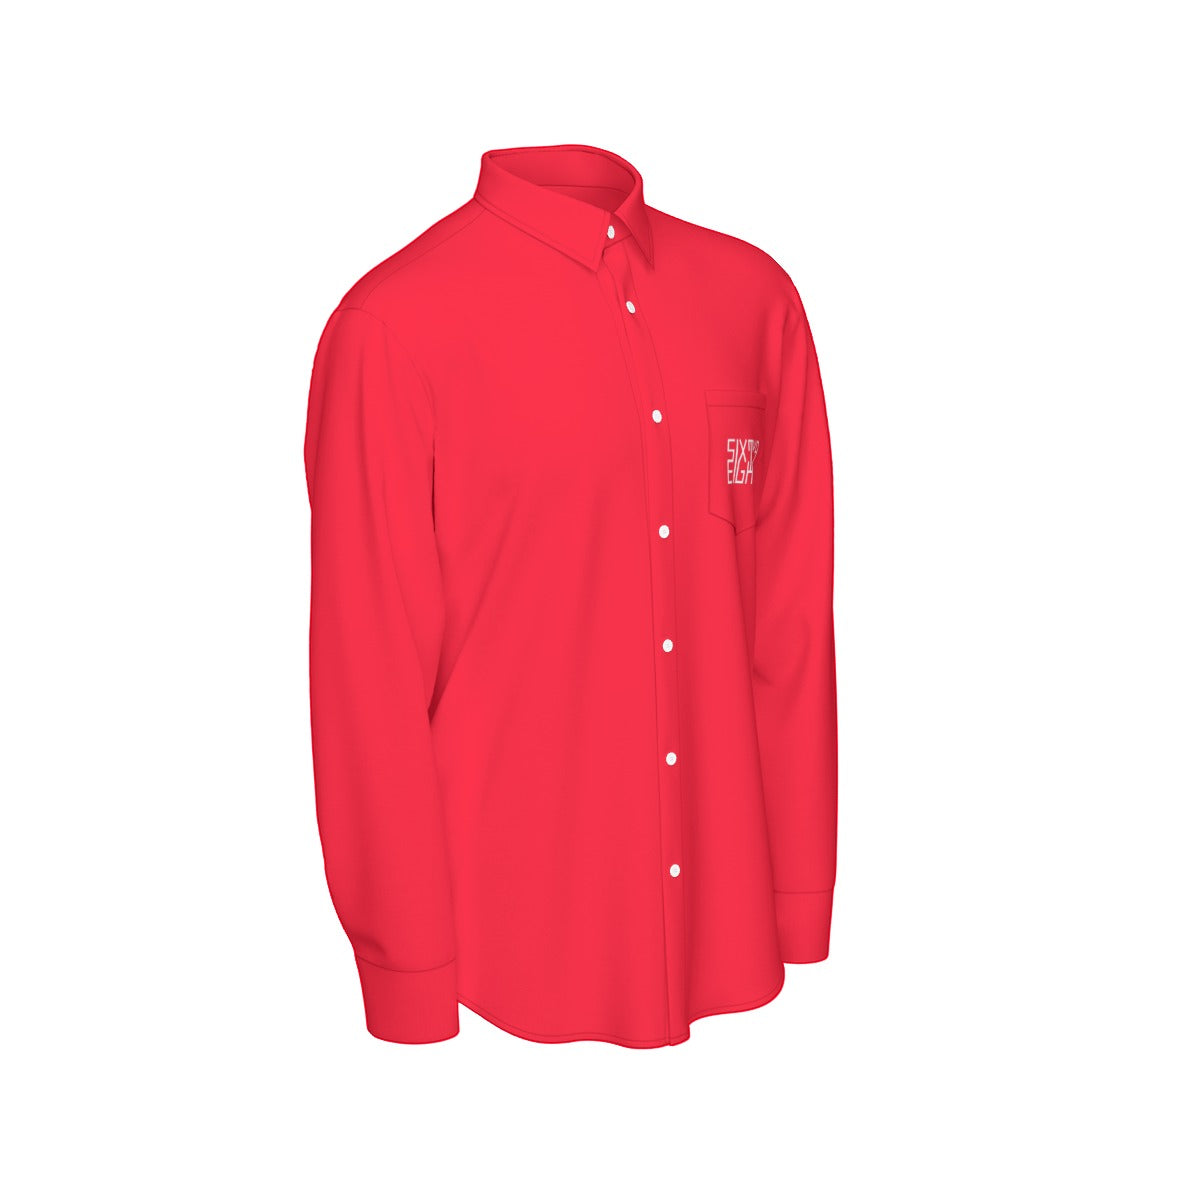 Sixty Eight 93 Logo White Red Men's Cotton Long Sleeve Shirt